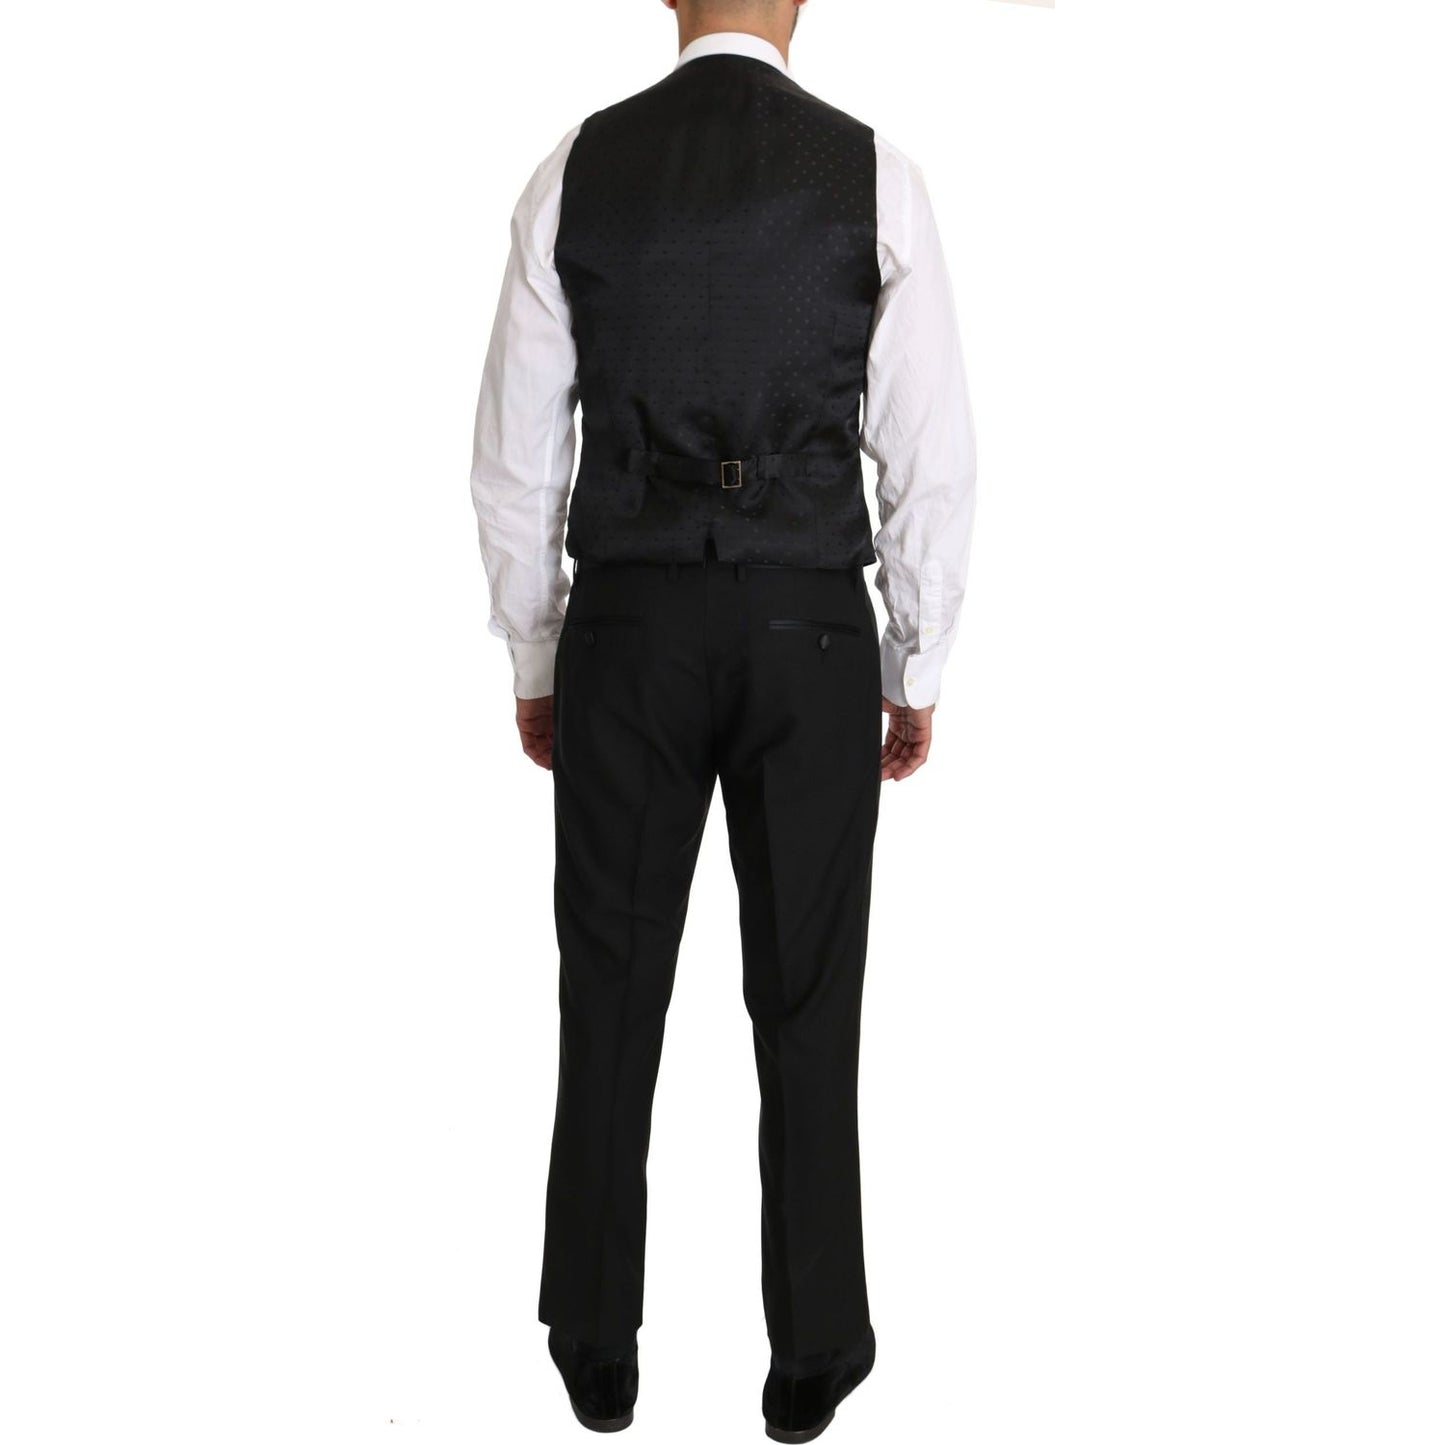 Dolce & Gabbana Sleek Black Slim Fit Formal Vest black-wool-dress-waistcoat-gillet-vest IMG_2985-scaled-acb8e236-6c8.jpg